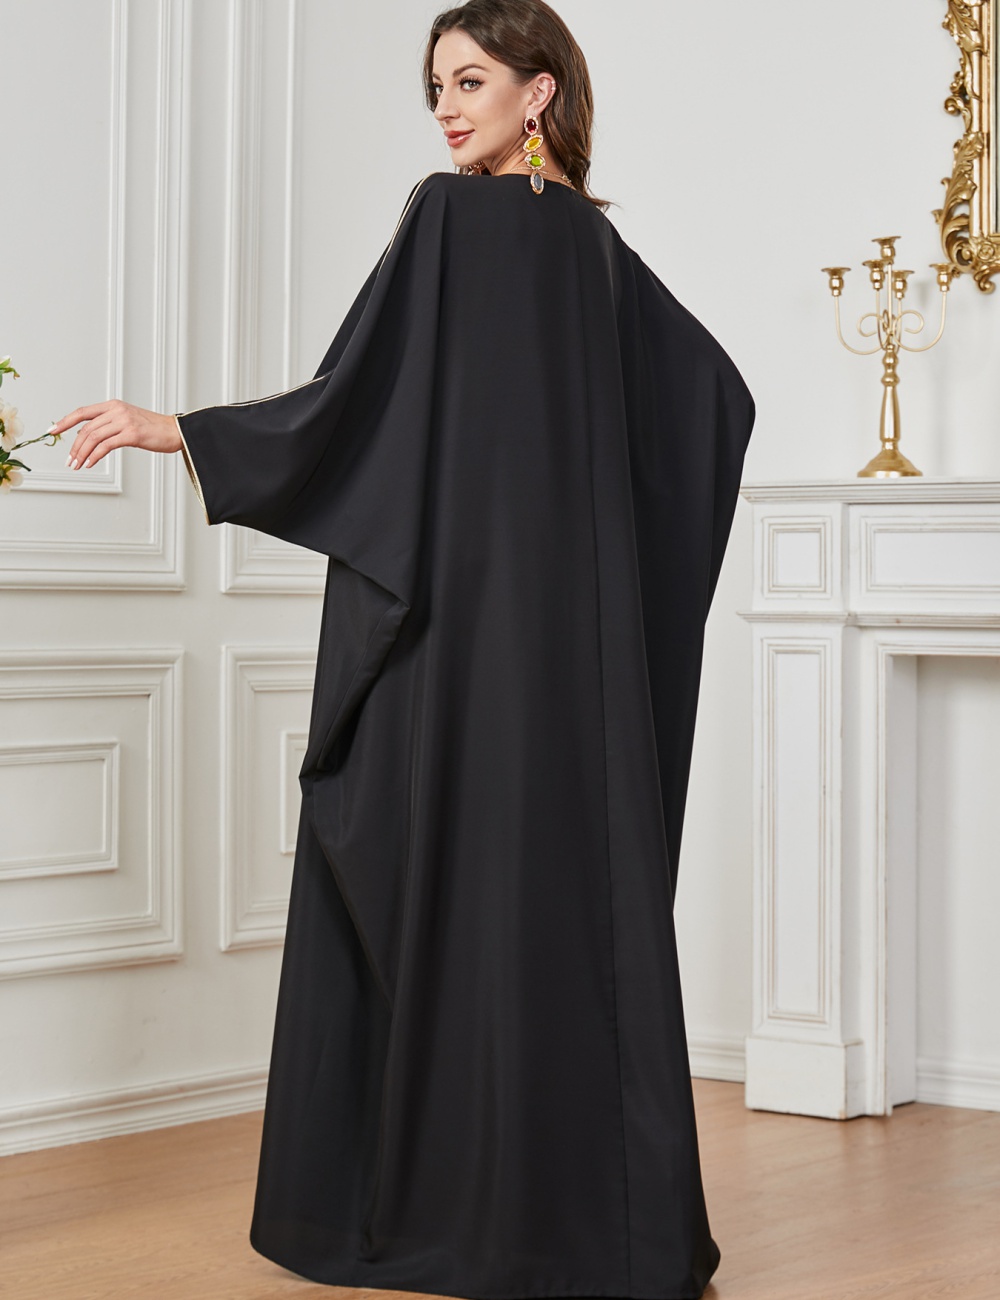 Tassels bat sleeve Casual loose pure dress for women